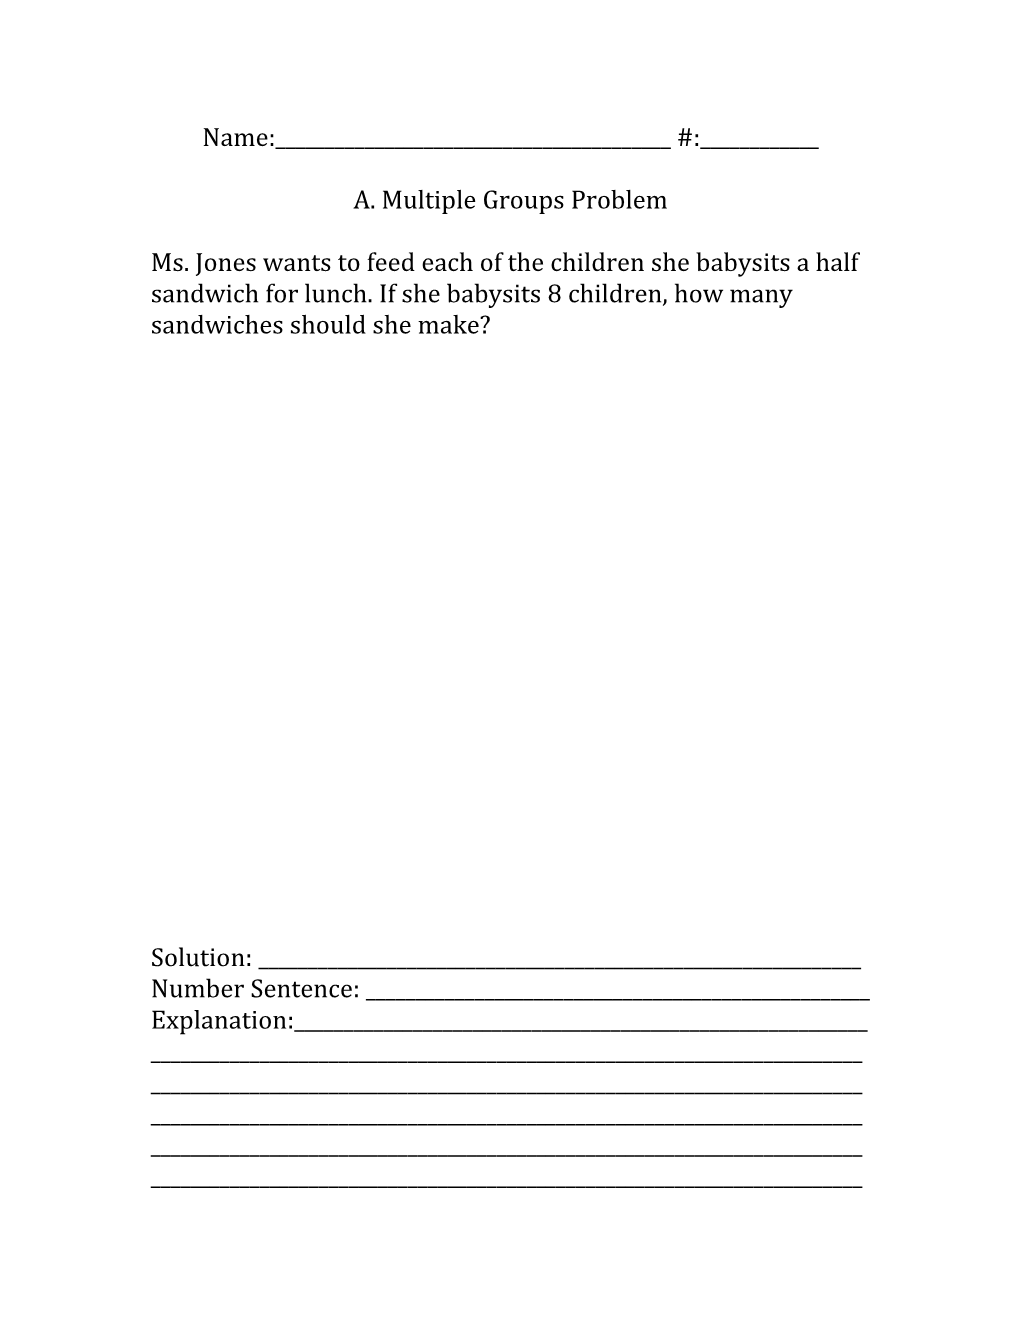 A. Multiple Groups Problem